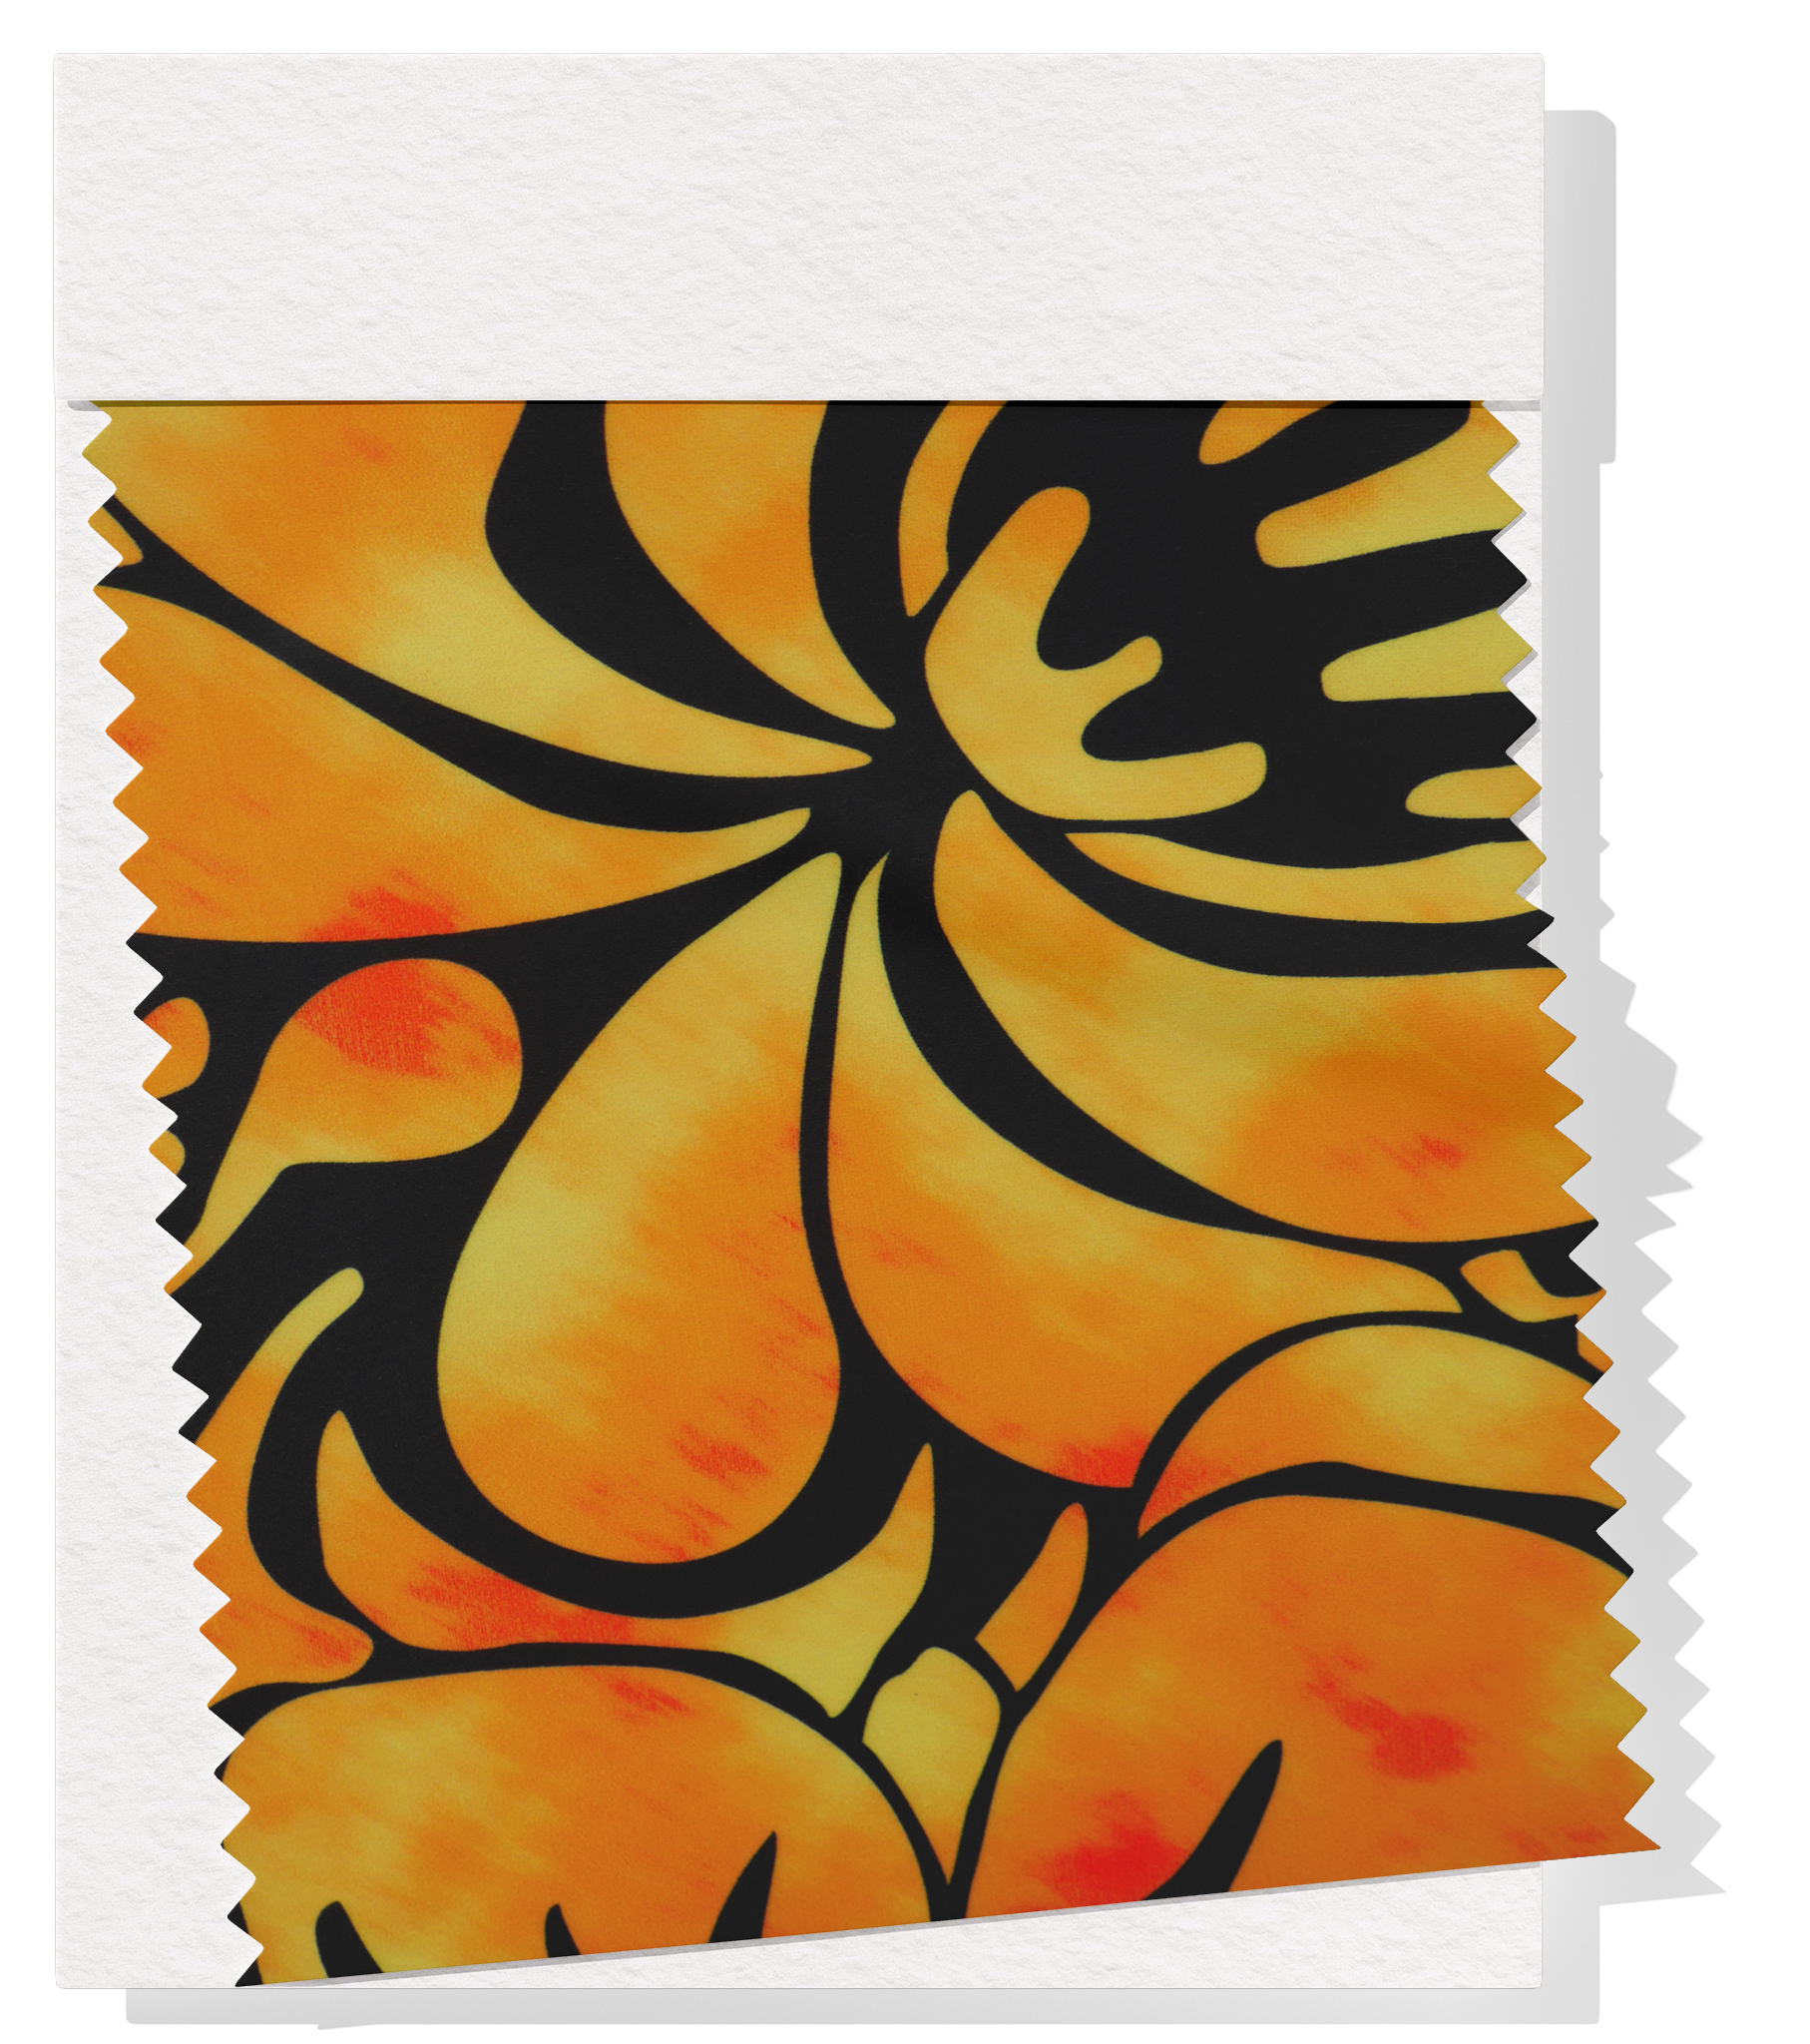 Stretch Polyester Pacific Screen Print $12.00p/m - Yellow, Orange & Black